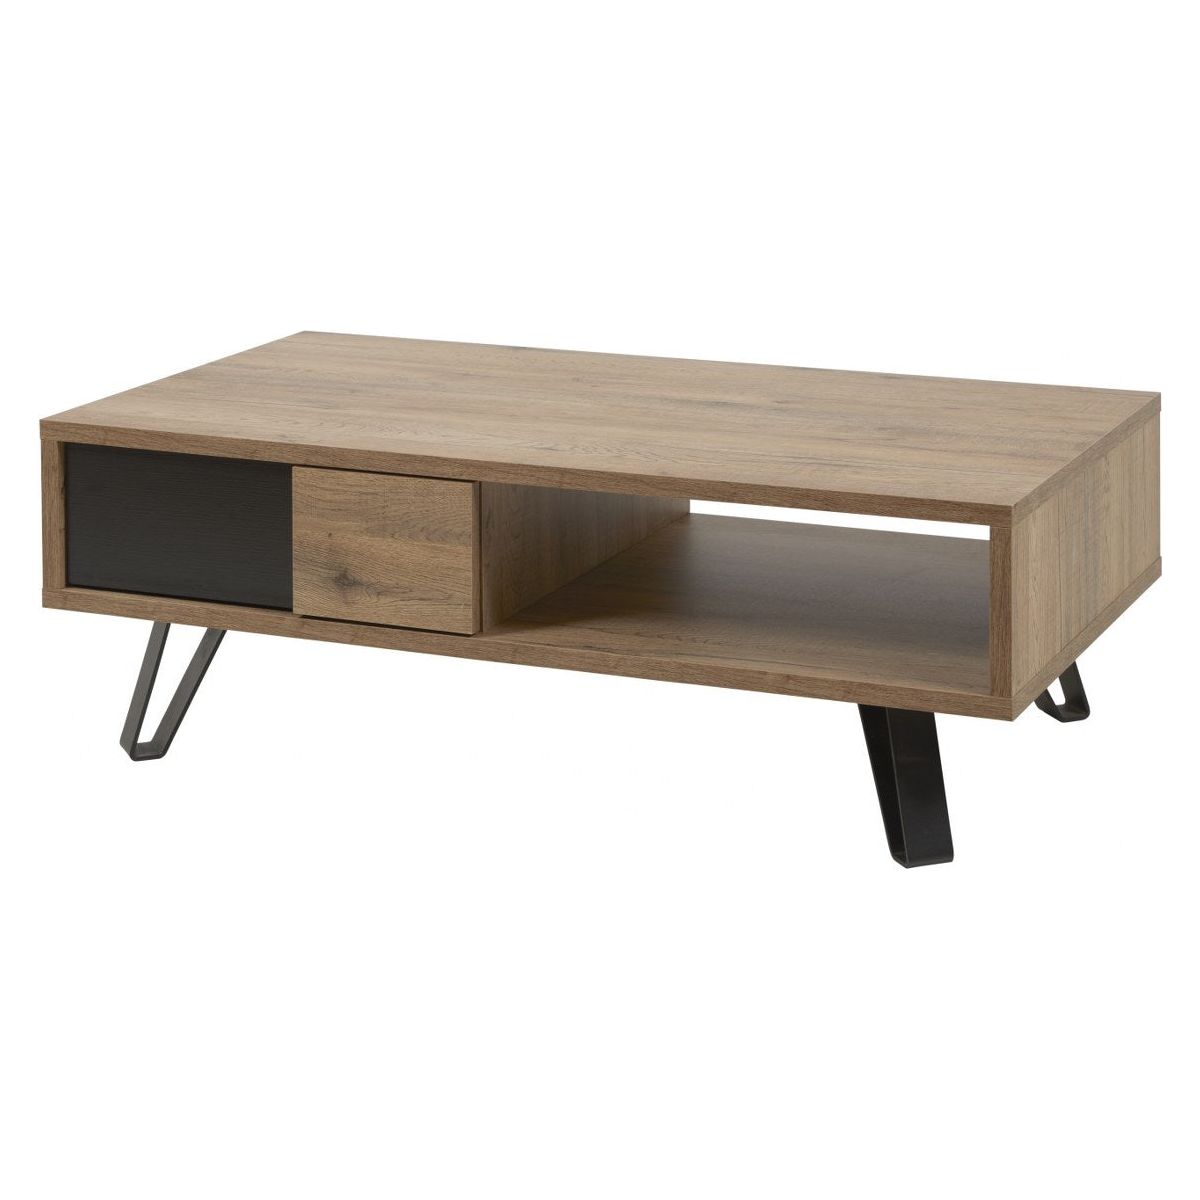 Coffee table | Furniture series Manor | brown, natural, black | 110